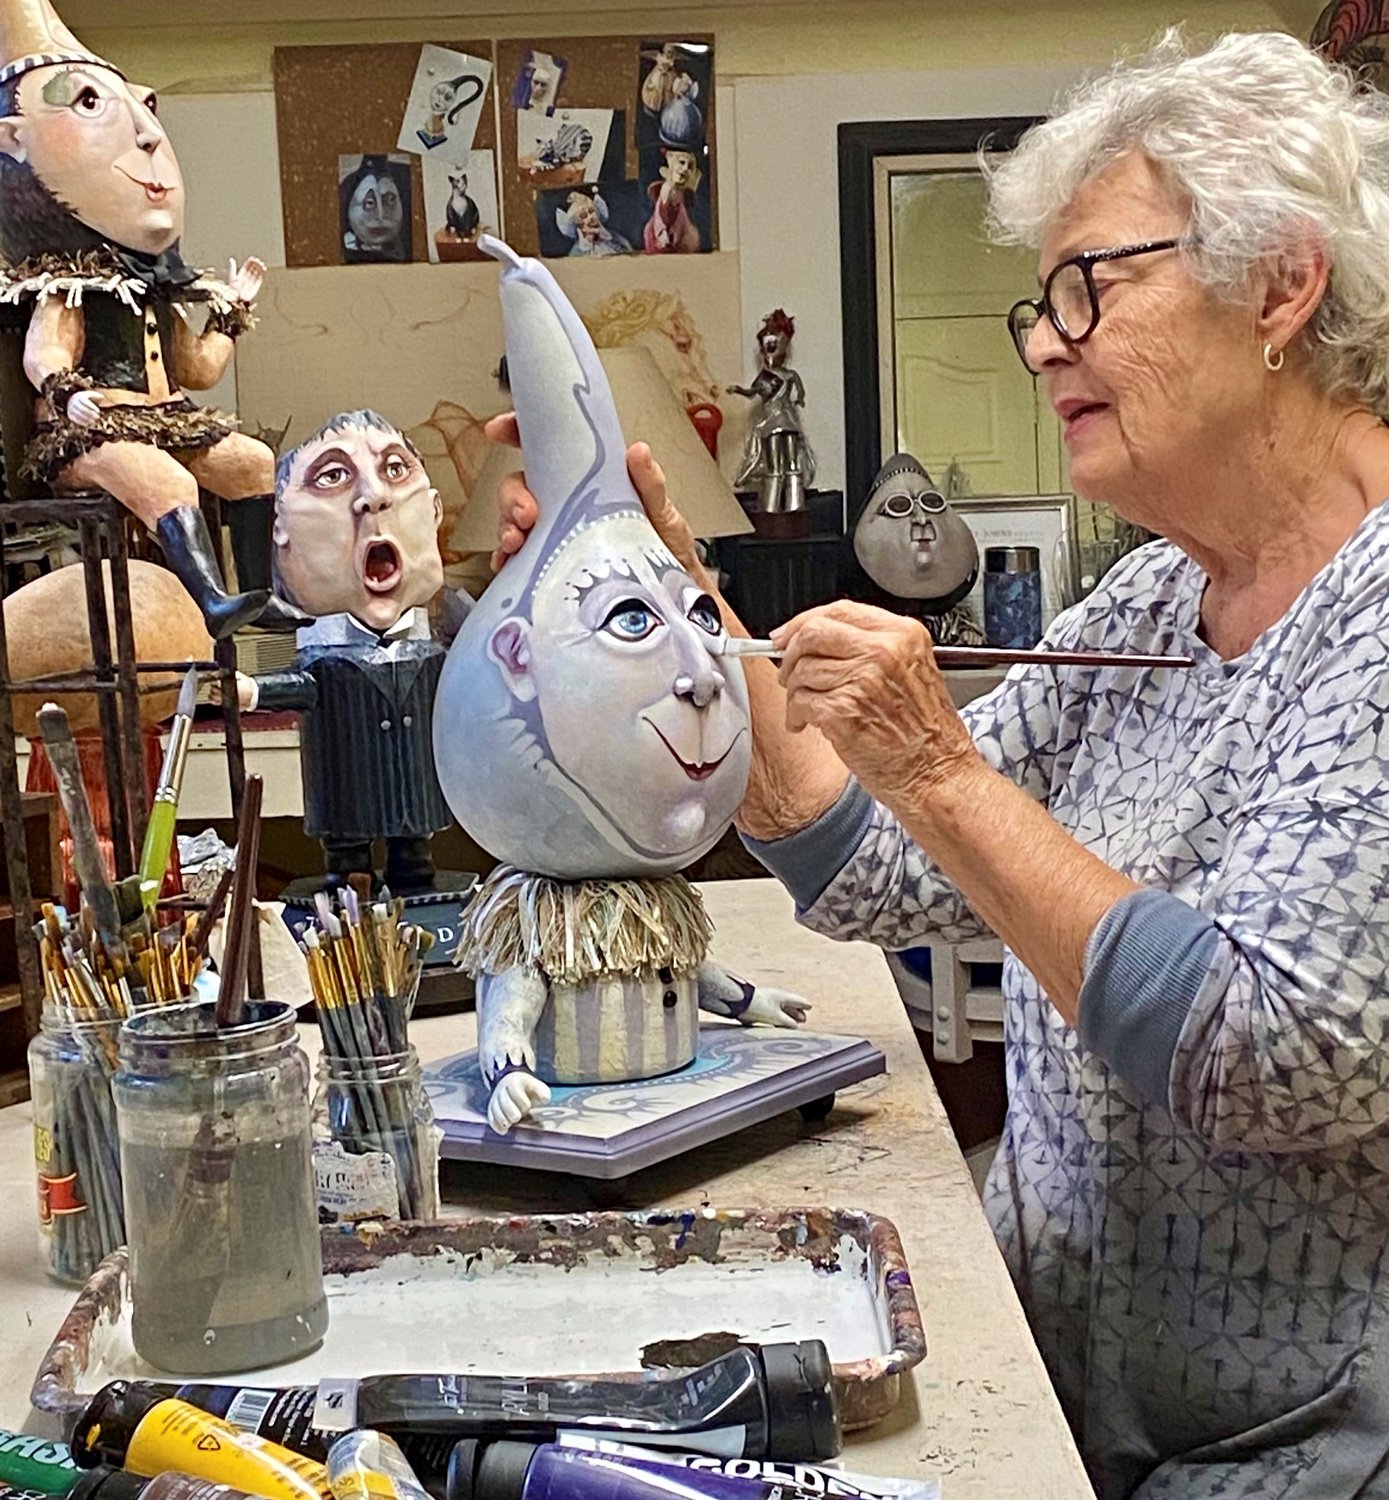 Artist Jan Miller works on one of her whimsical sculptures in her studio.